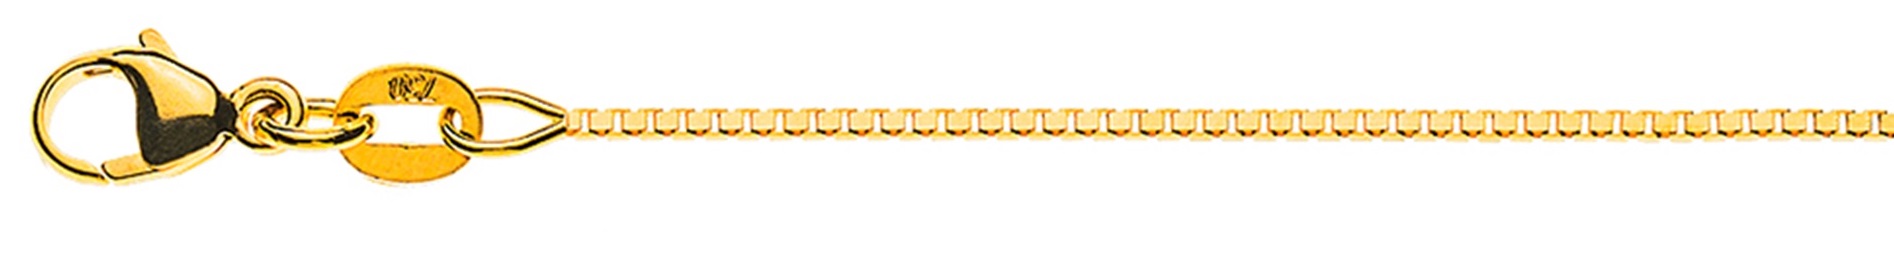 AURONOS Élégance Halskette Gelbgold 14K Venezianerkette diamantiert 42cm 0.9mm